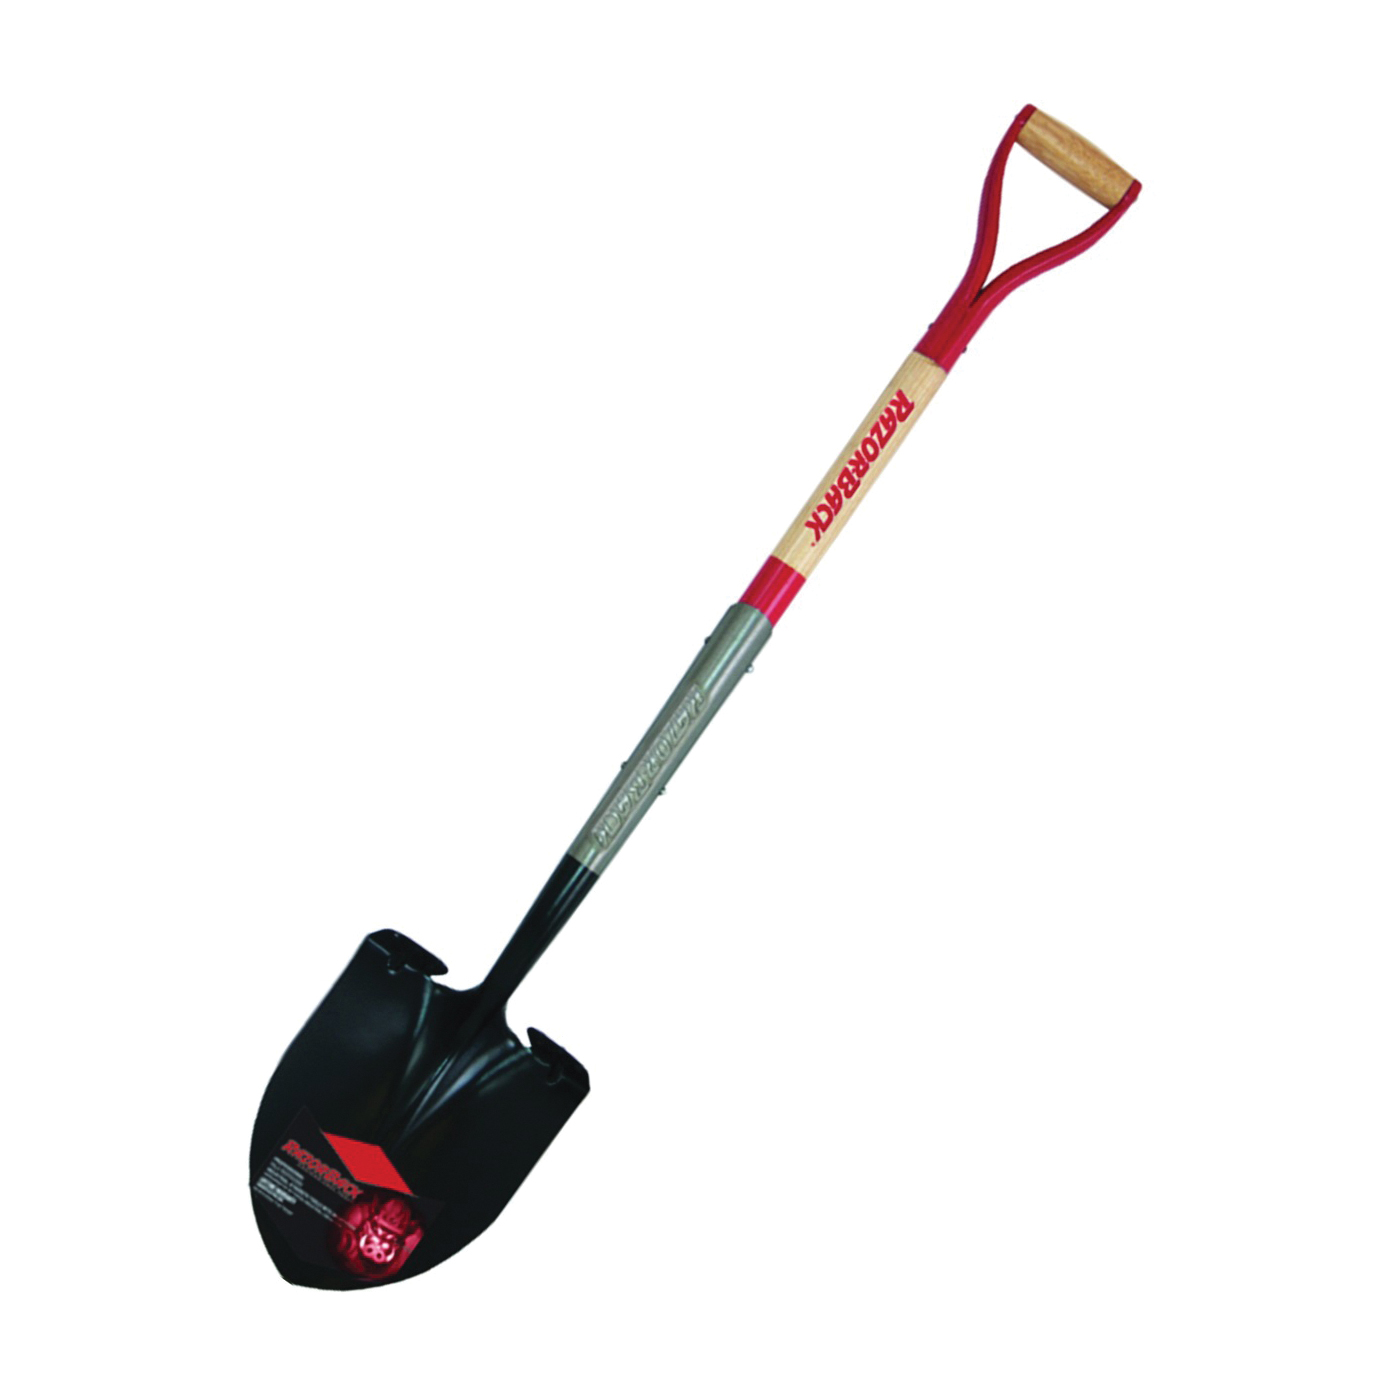 2594200 Digging Shovel, 9 in W Blade, Steel Blade, North American Hardwood Handle, D-Shaped Handle